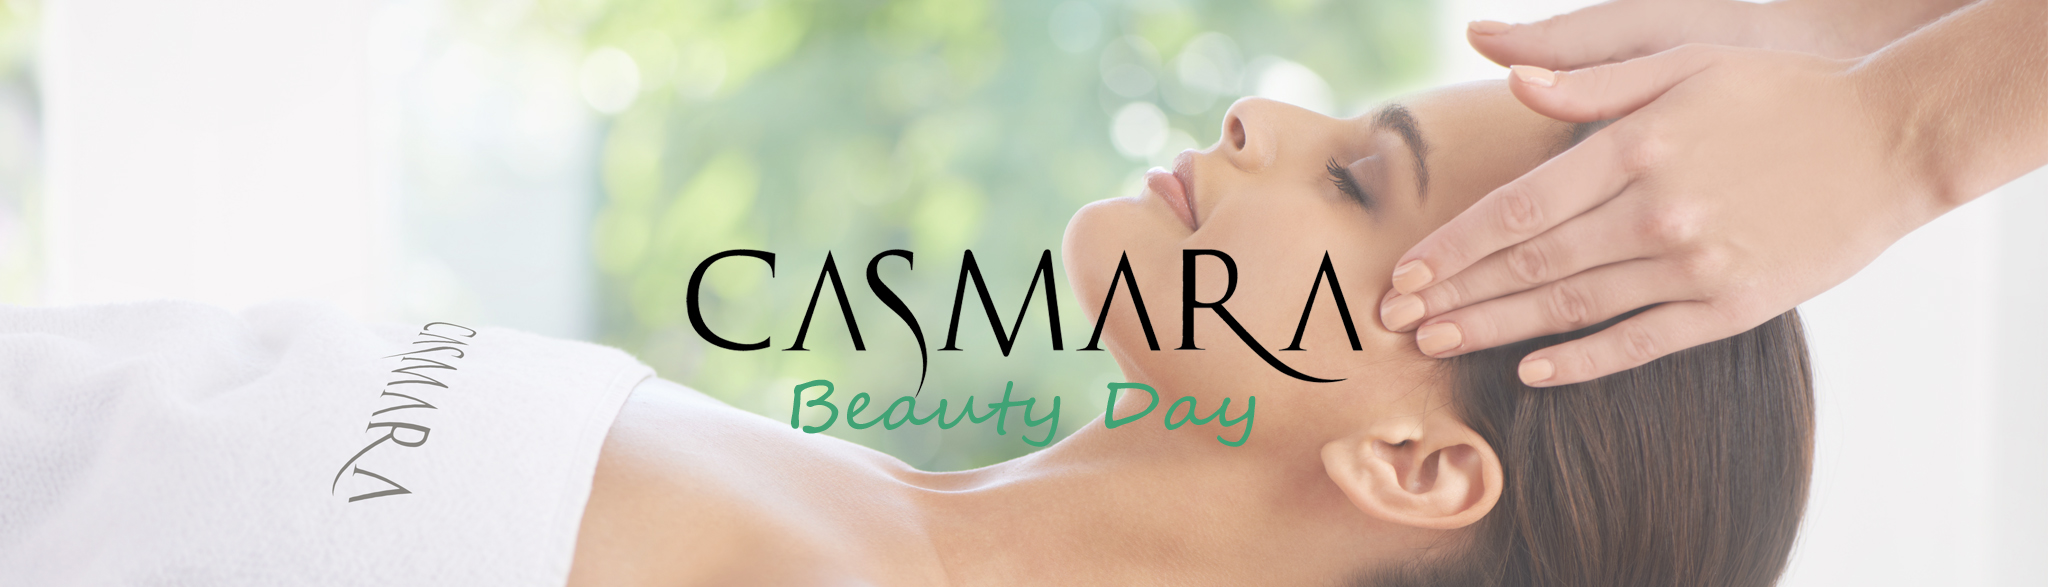 Casmara Beauty Day